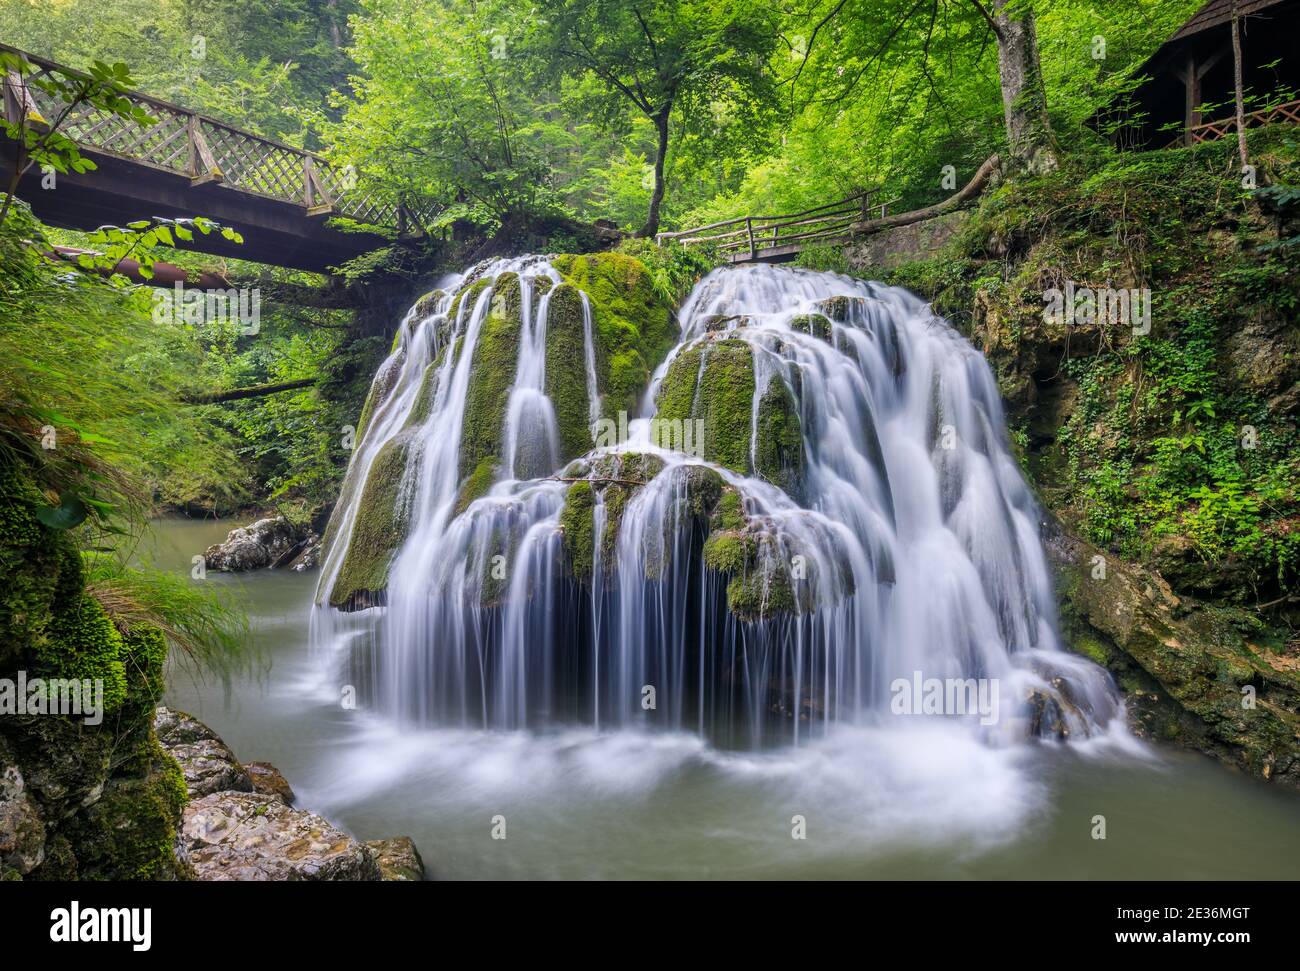 Bigar Waterfall one of the most beautiful waterfalls in the world. Romania. Stock Photo